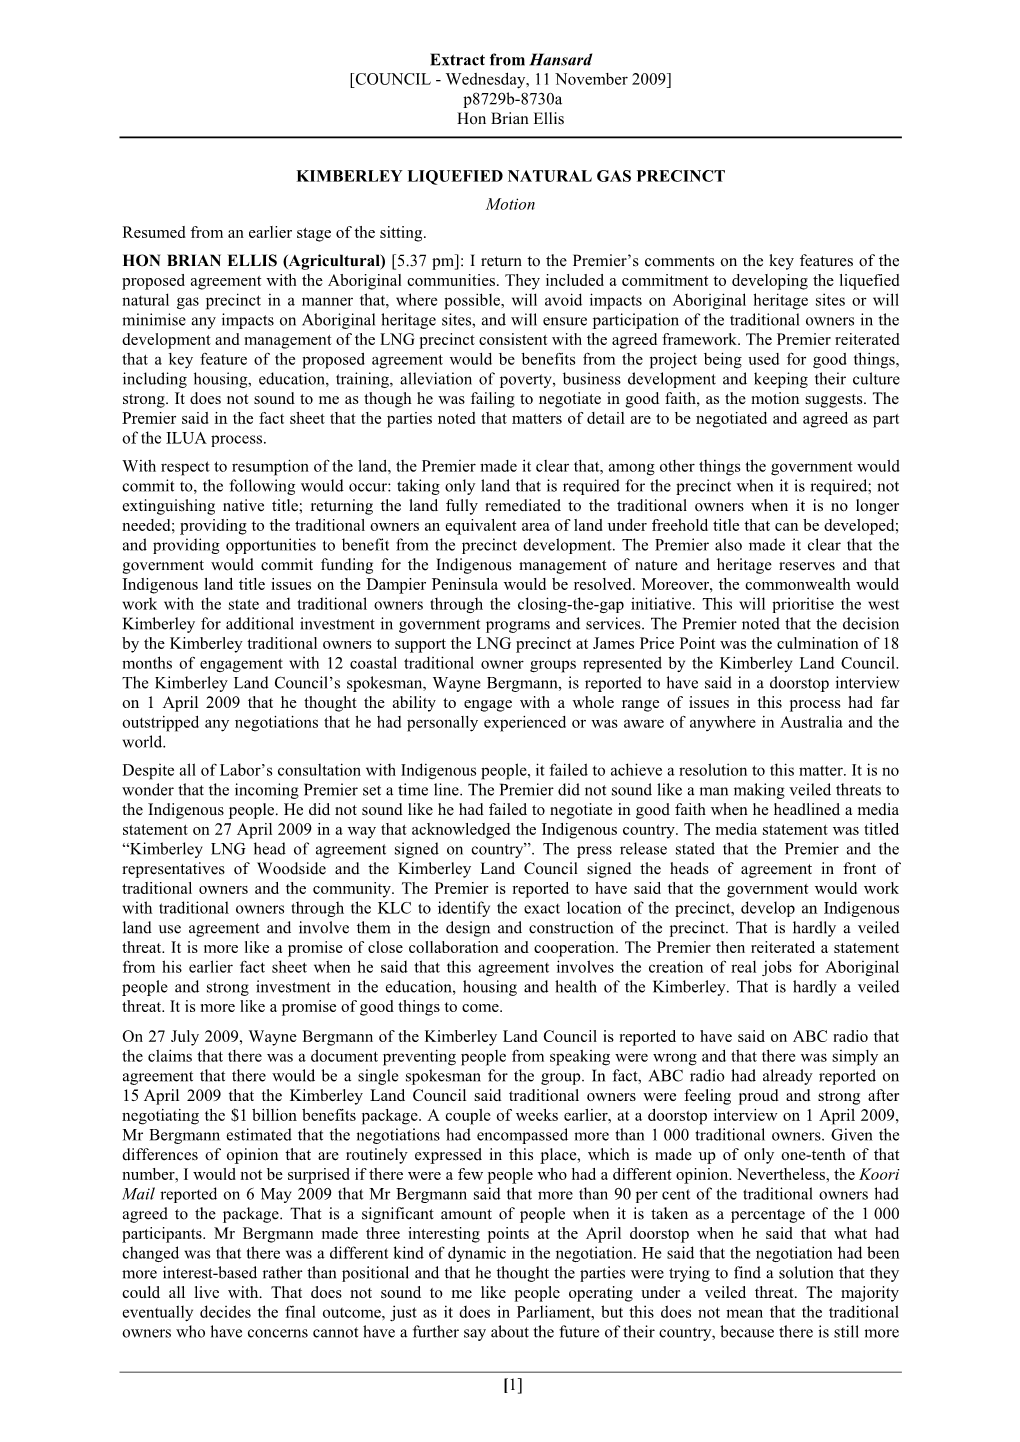 Extract from Hansard [COUNCIL - Wednesday, 11 November 2009] P8729b-8730A Hon Brian Ellis